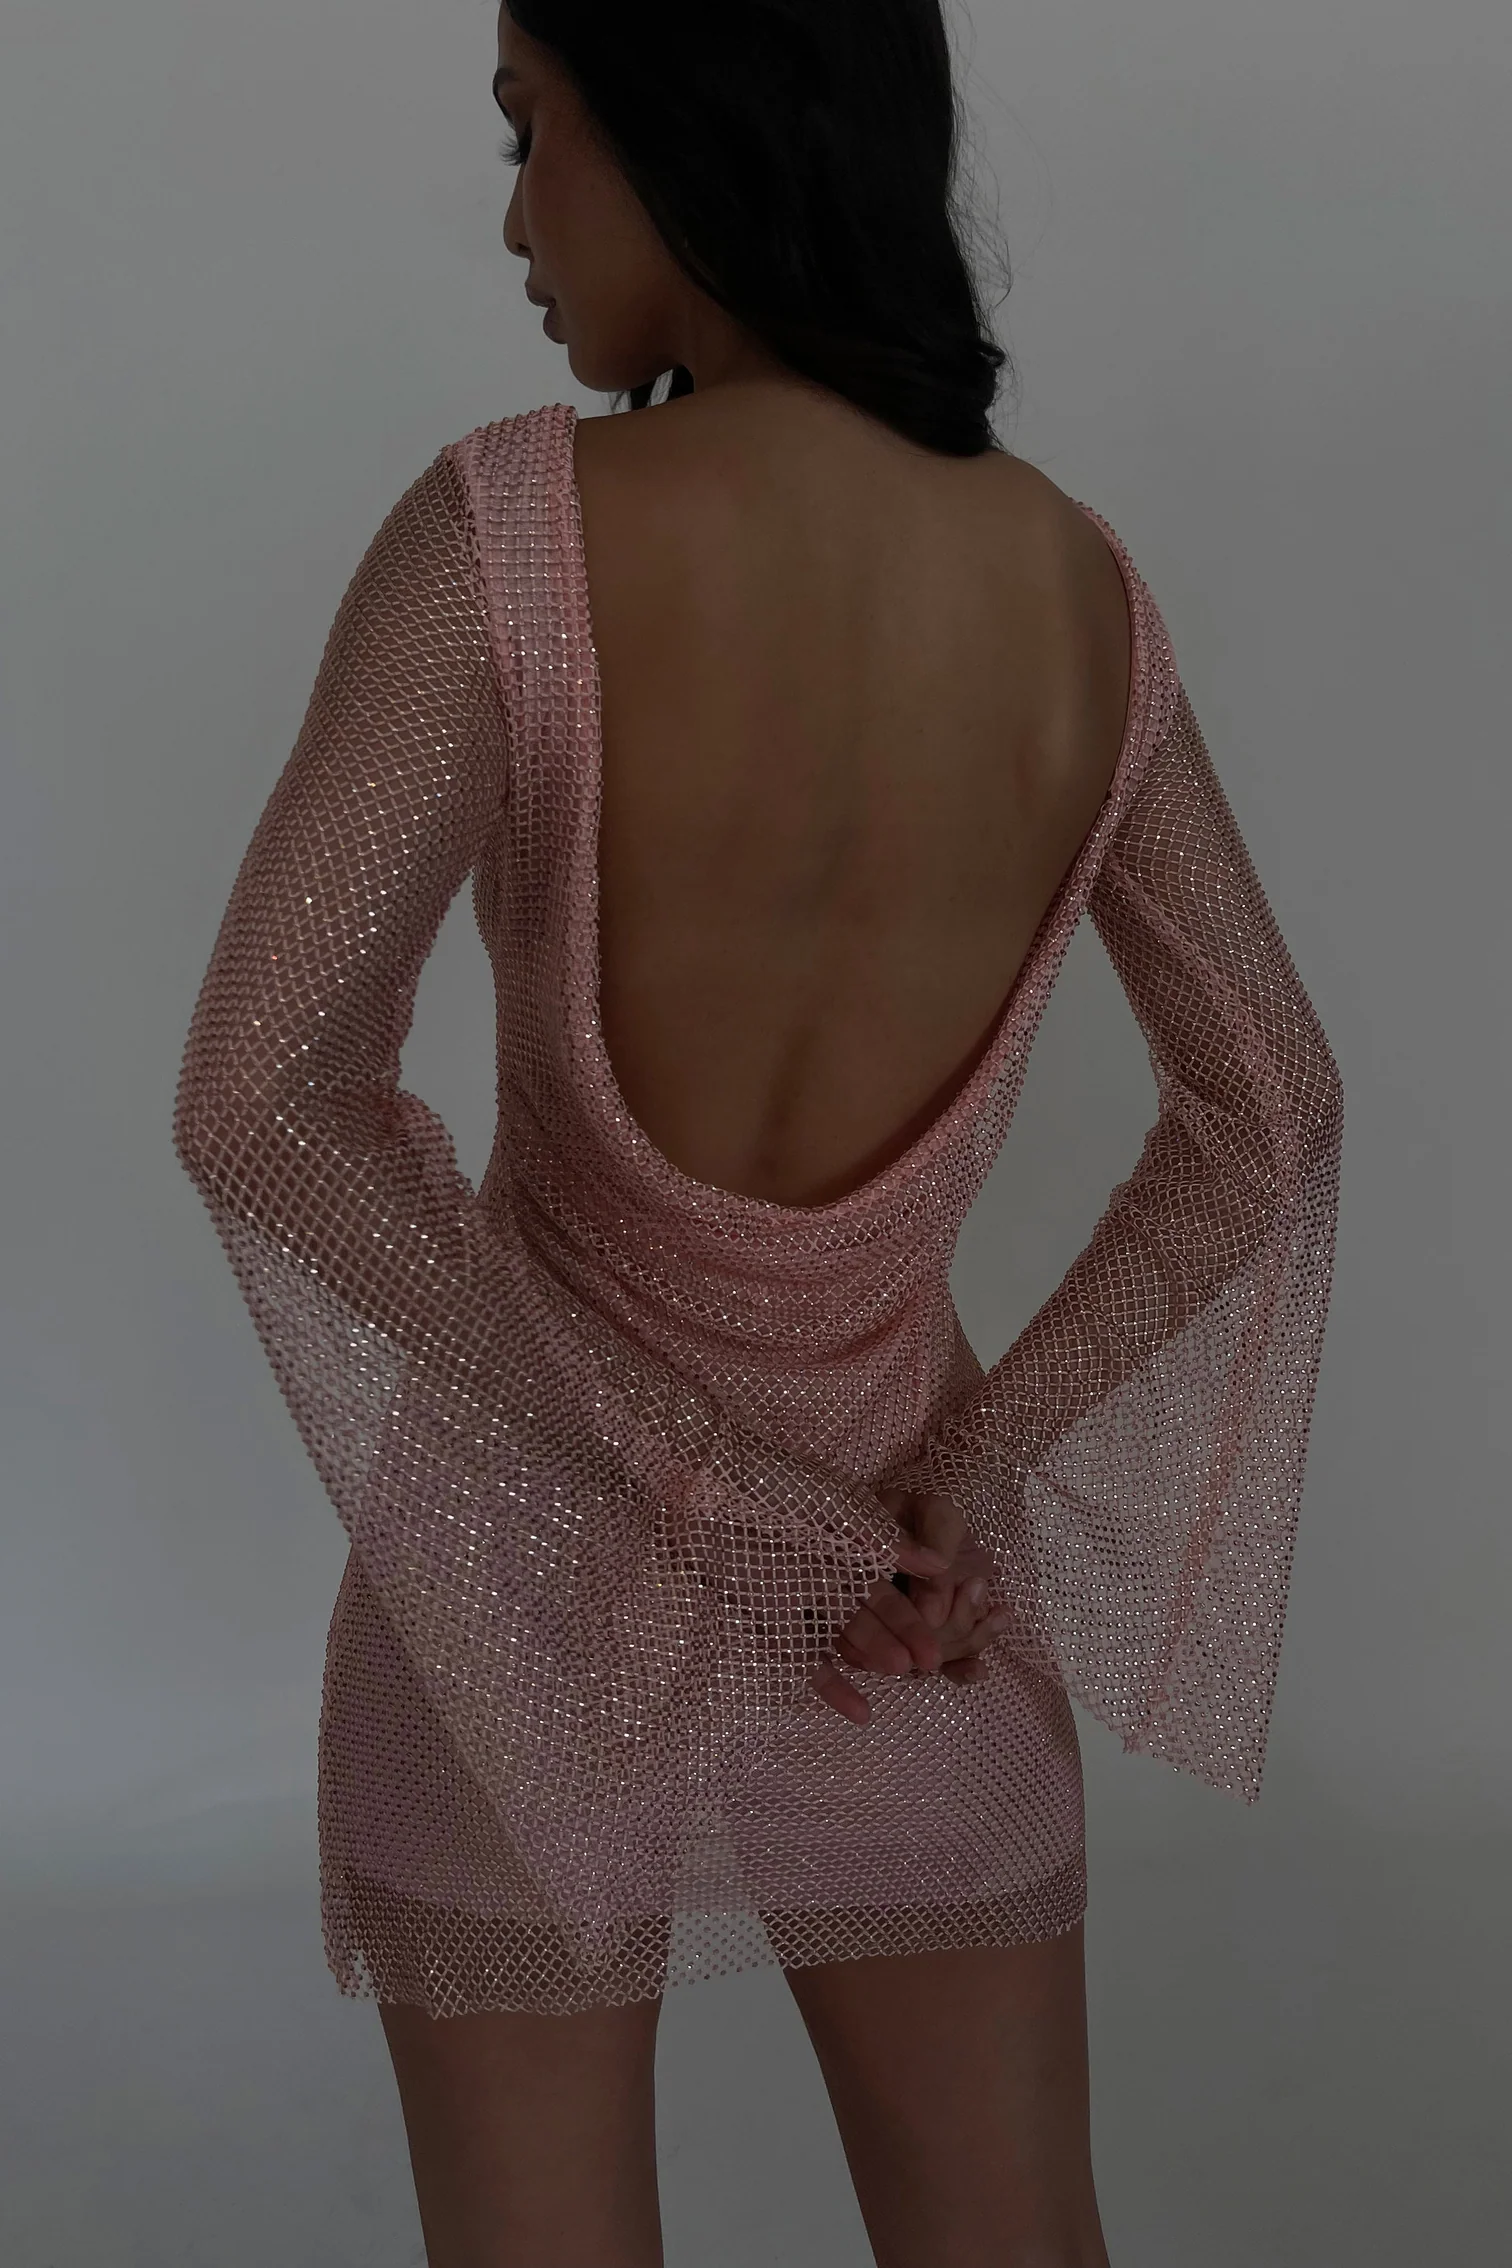 Meshki Samira Dress for rent. Pink sequin mini dress with open back.